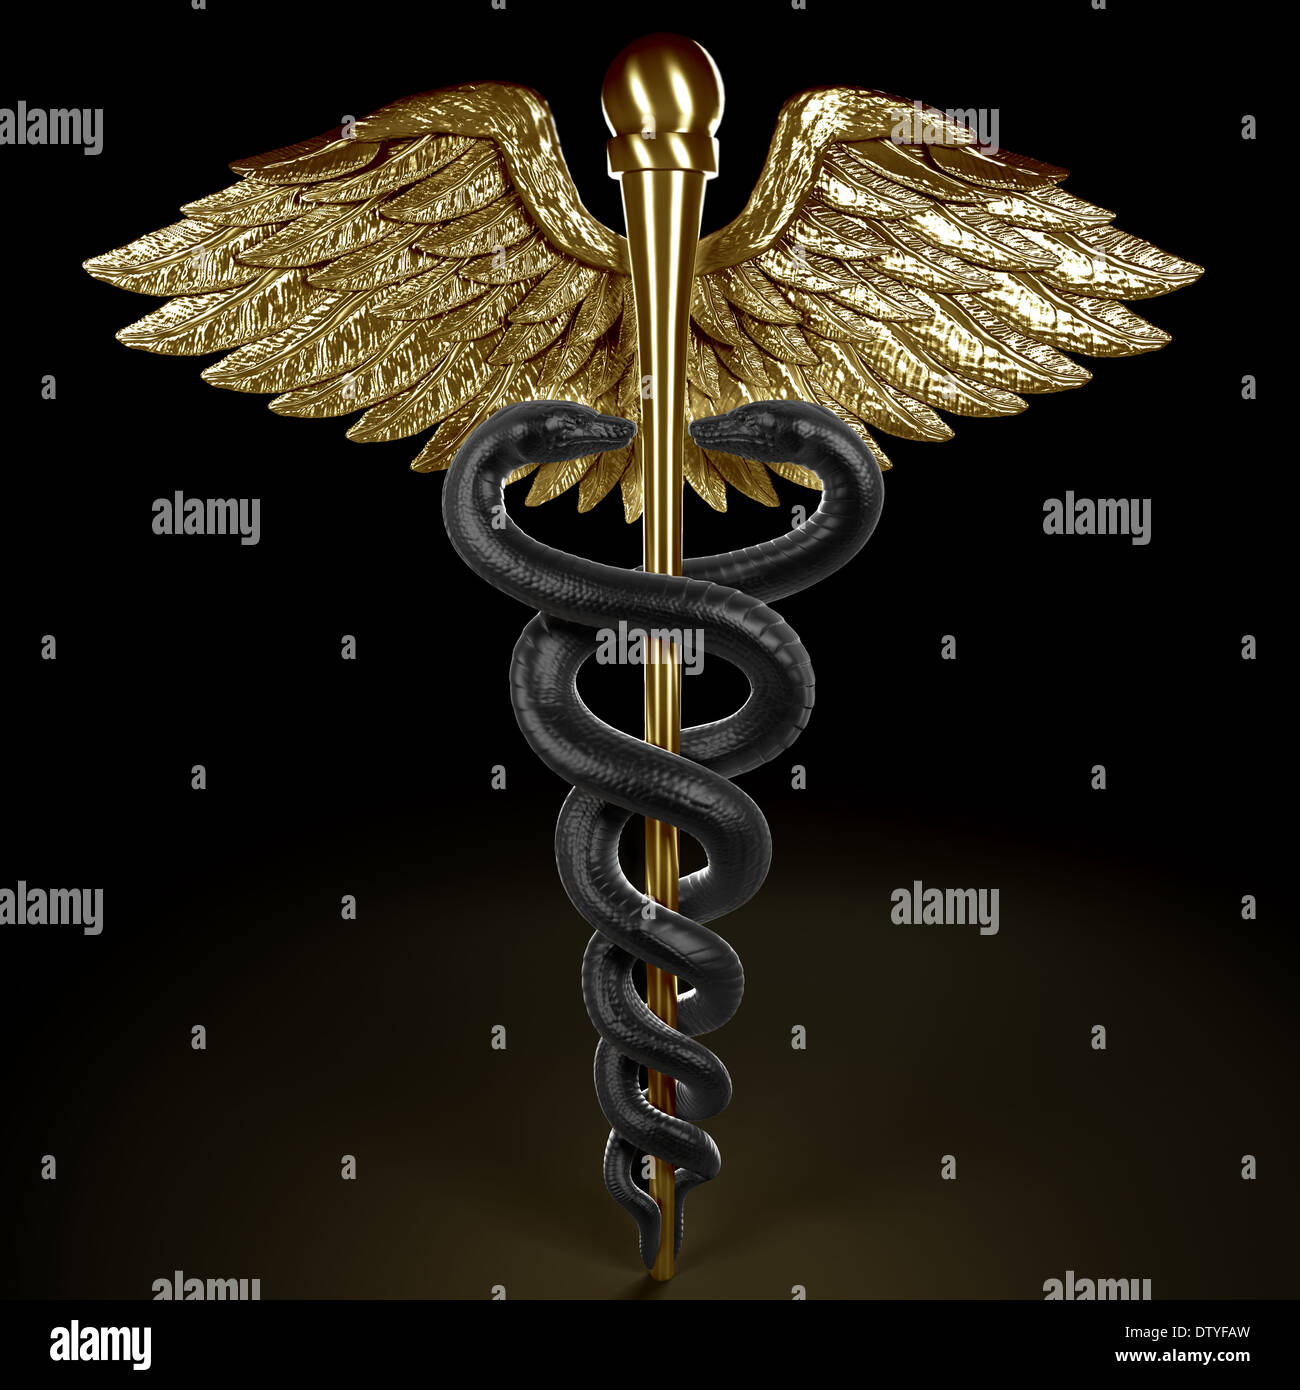 Medicine Symbol Snake Stock Photos & Medicine Symbol Snake Stock Images ...